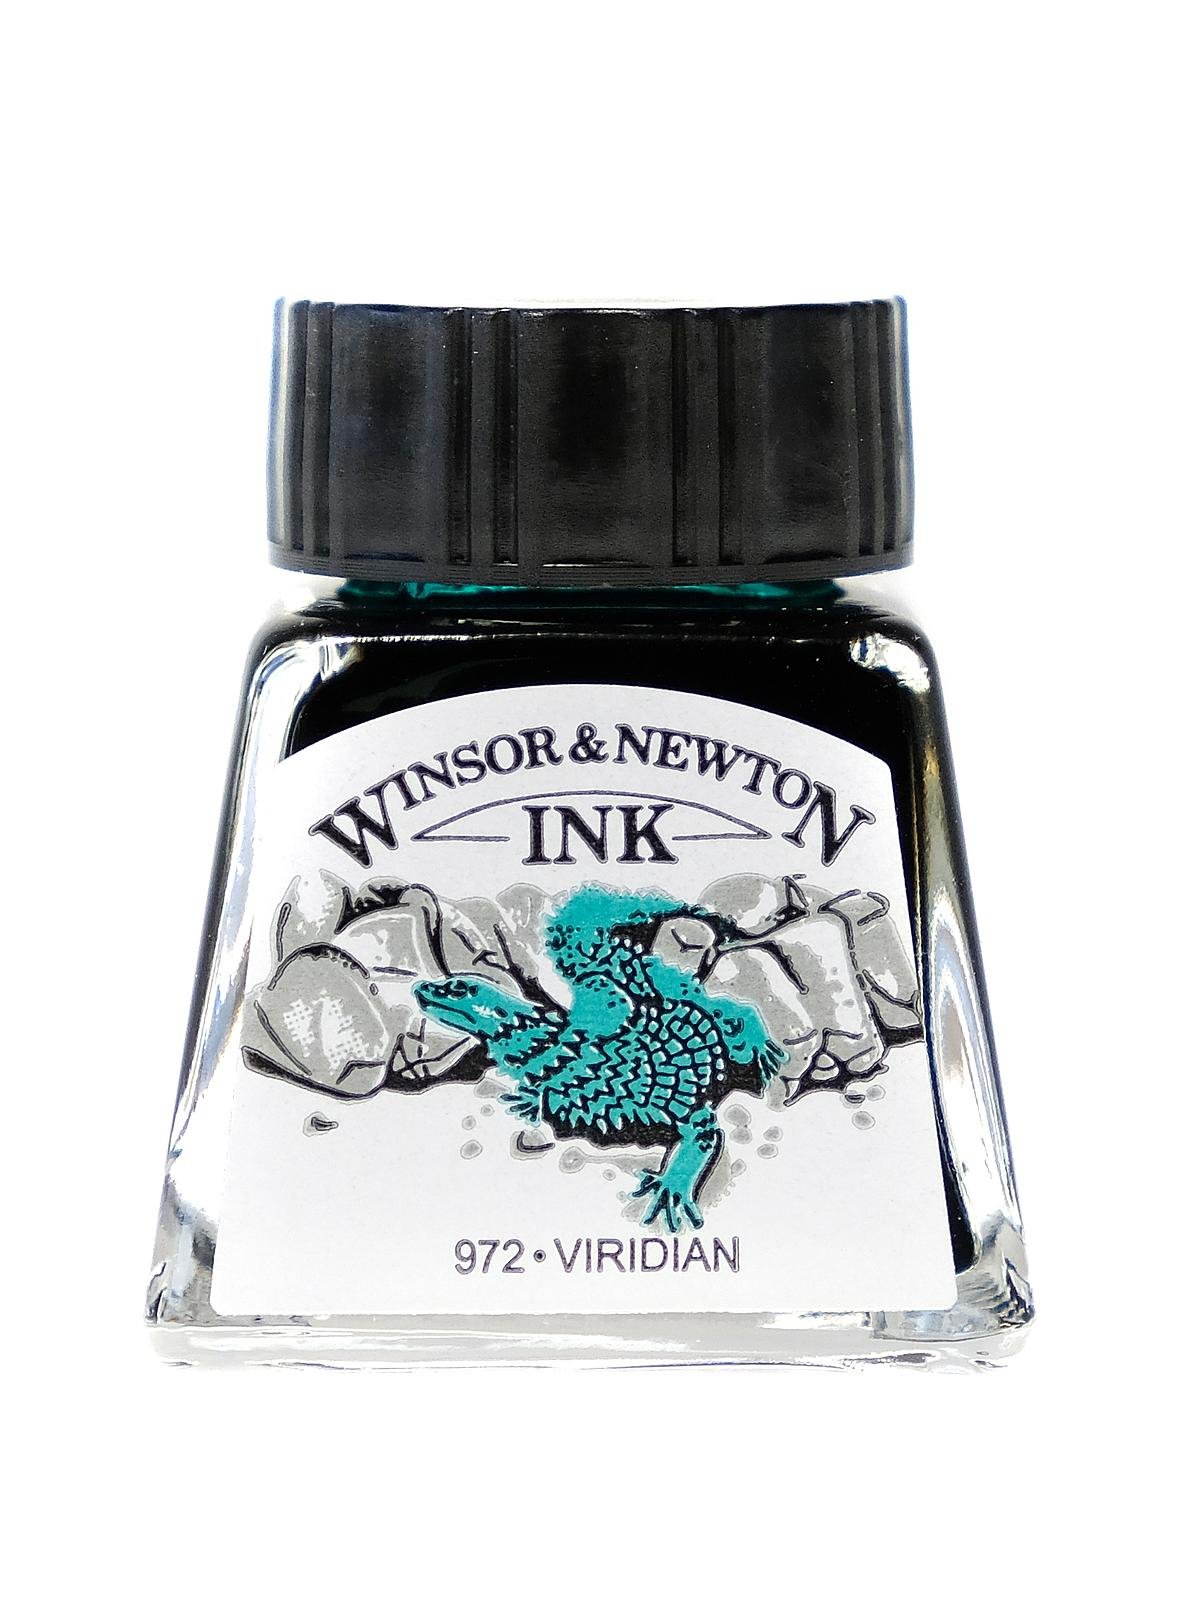 Winsor & Newton Drawing Ink - 30 mL, Gold